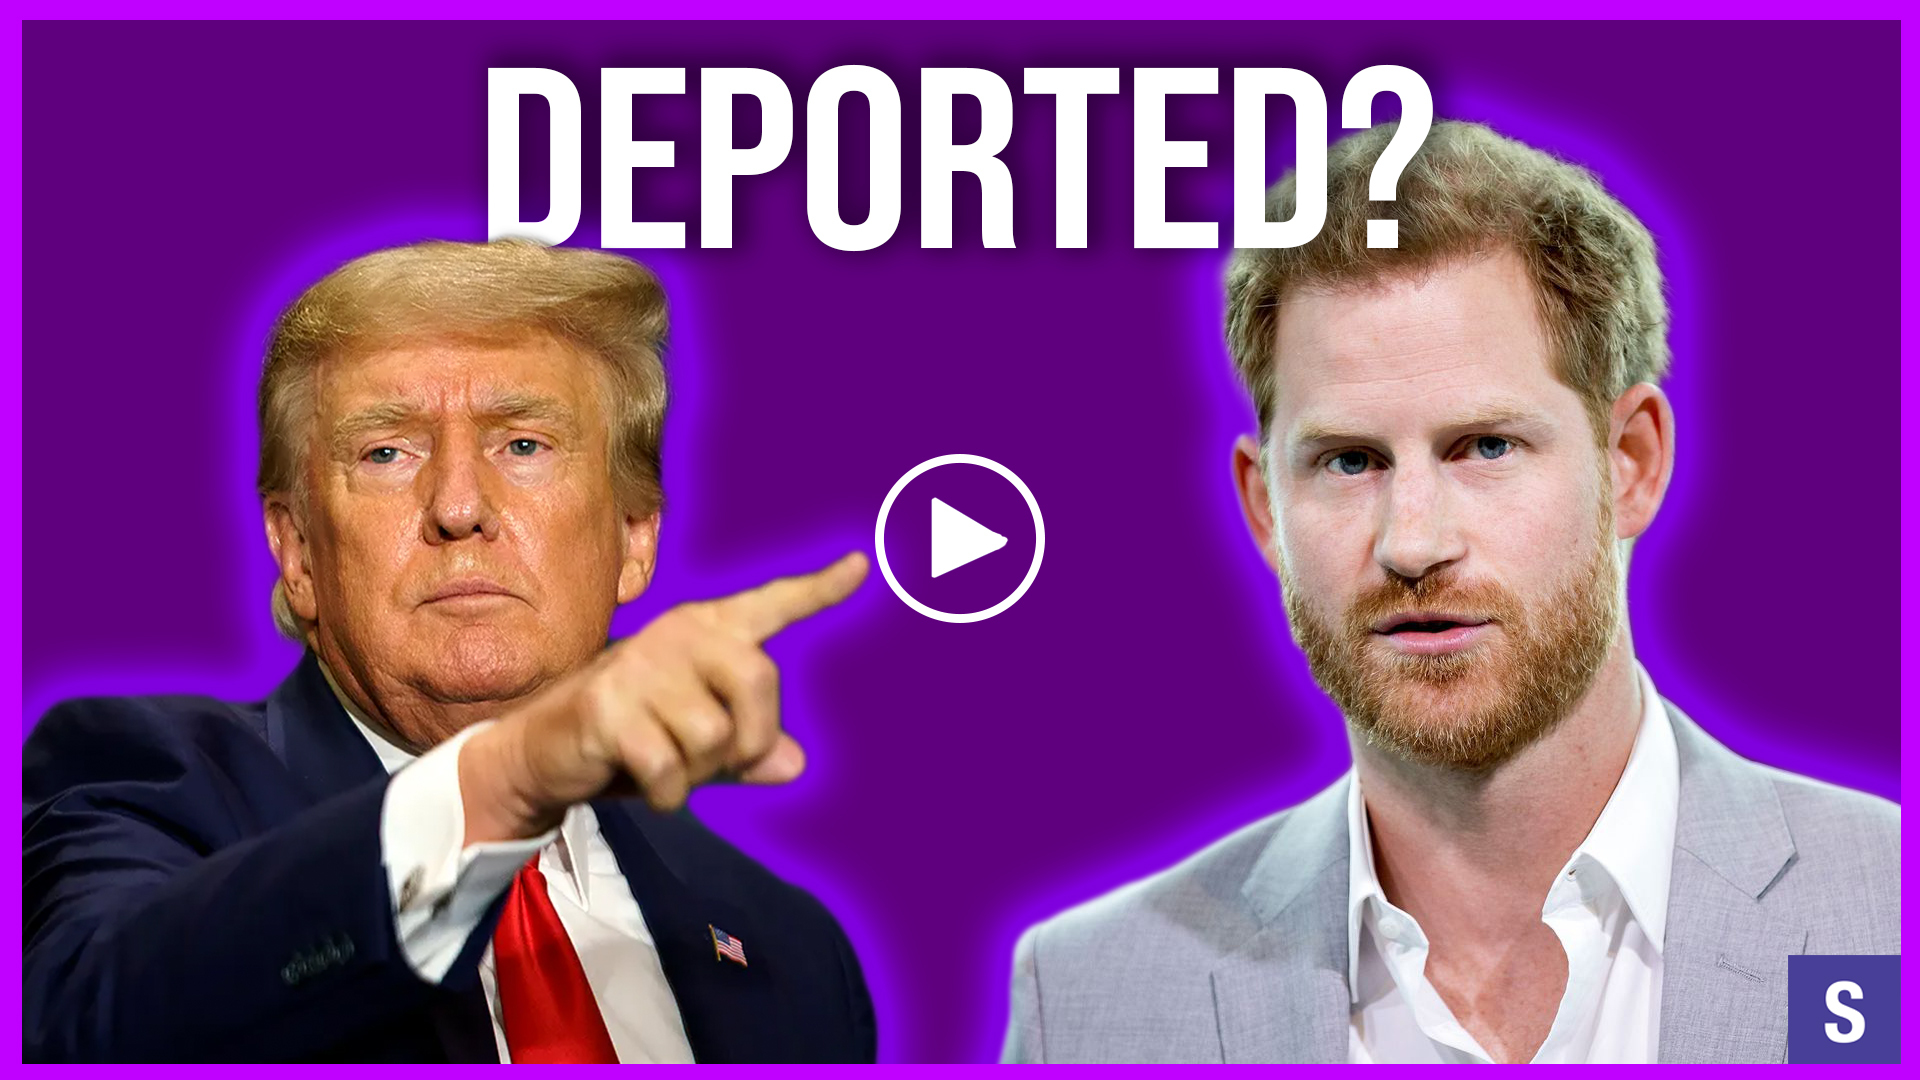 Deported? #trump #princeharry